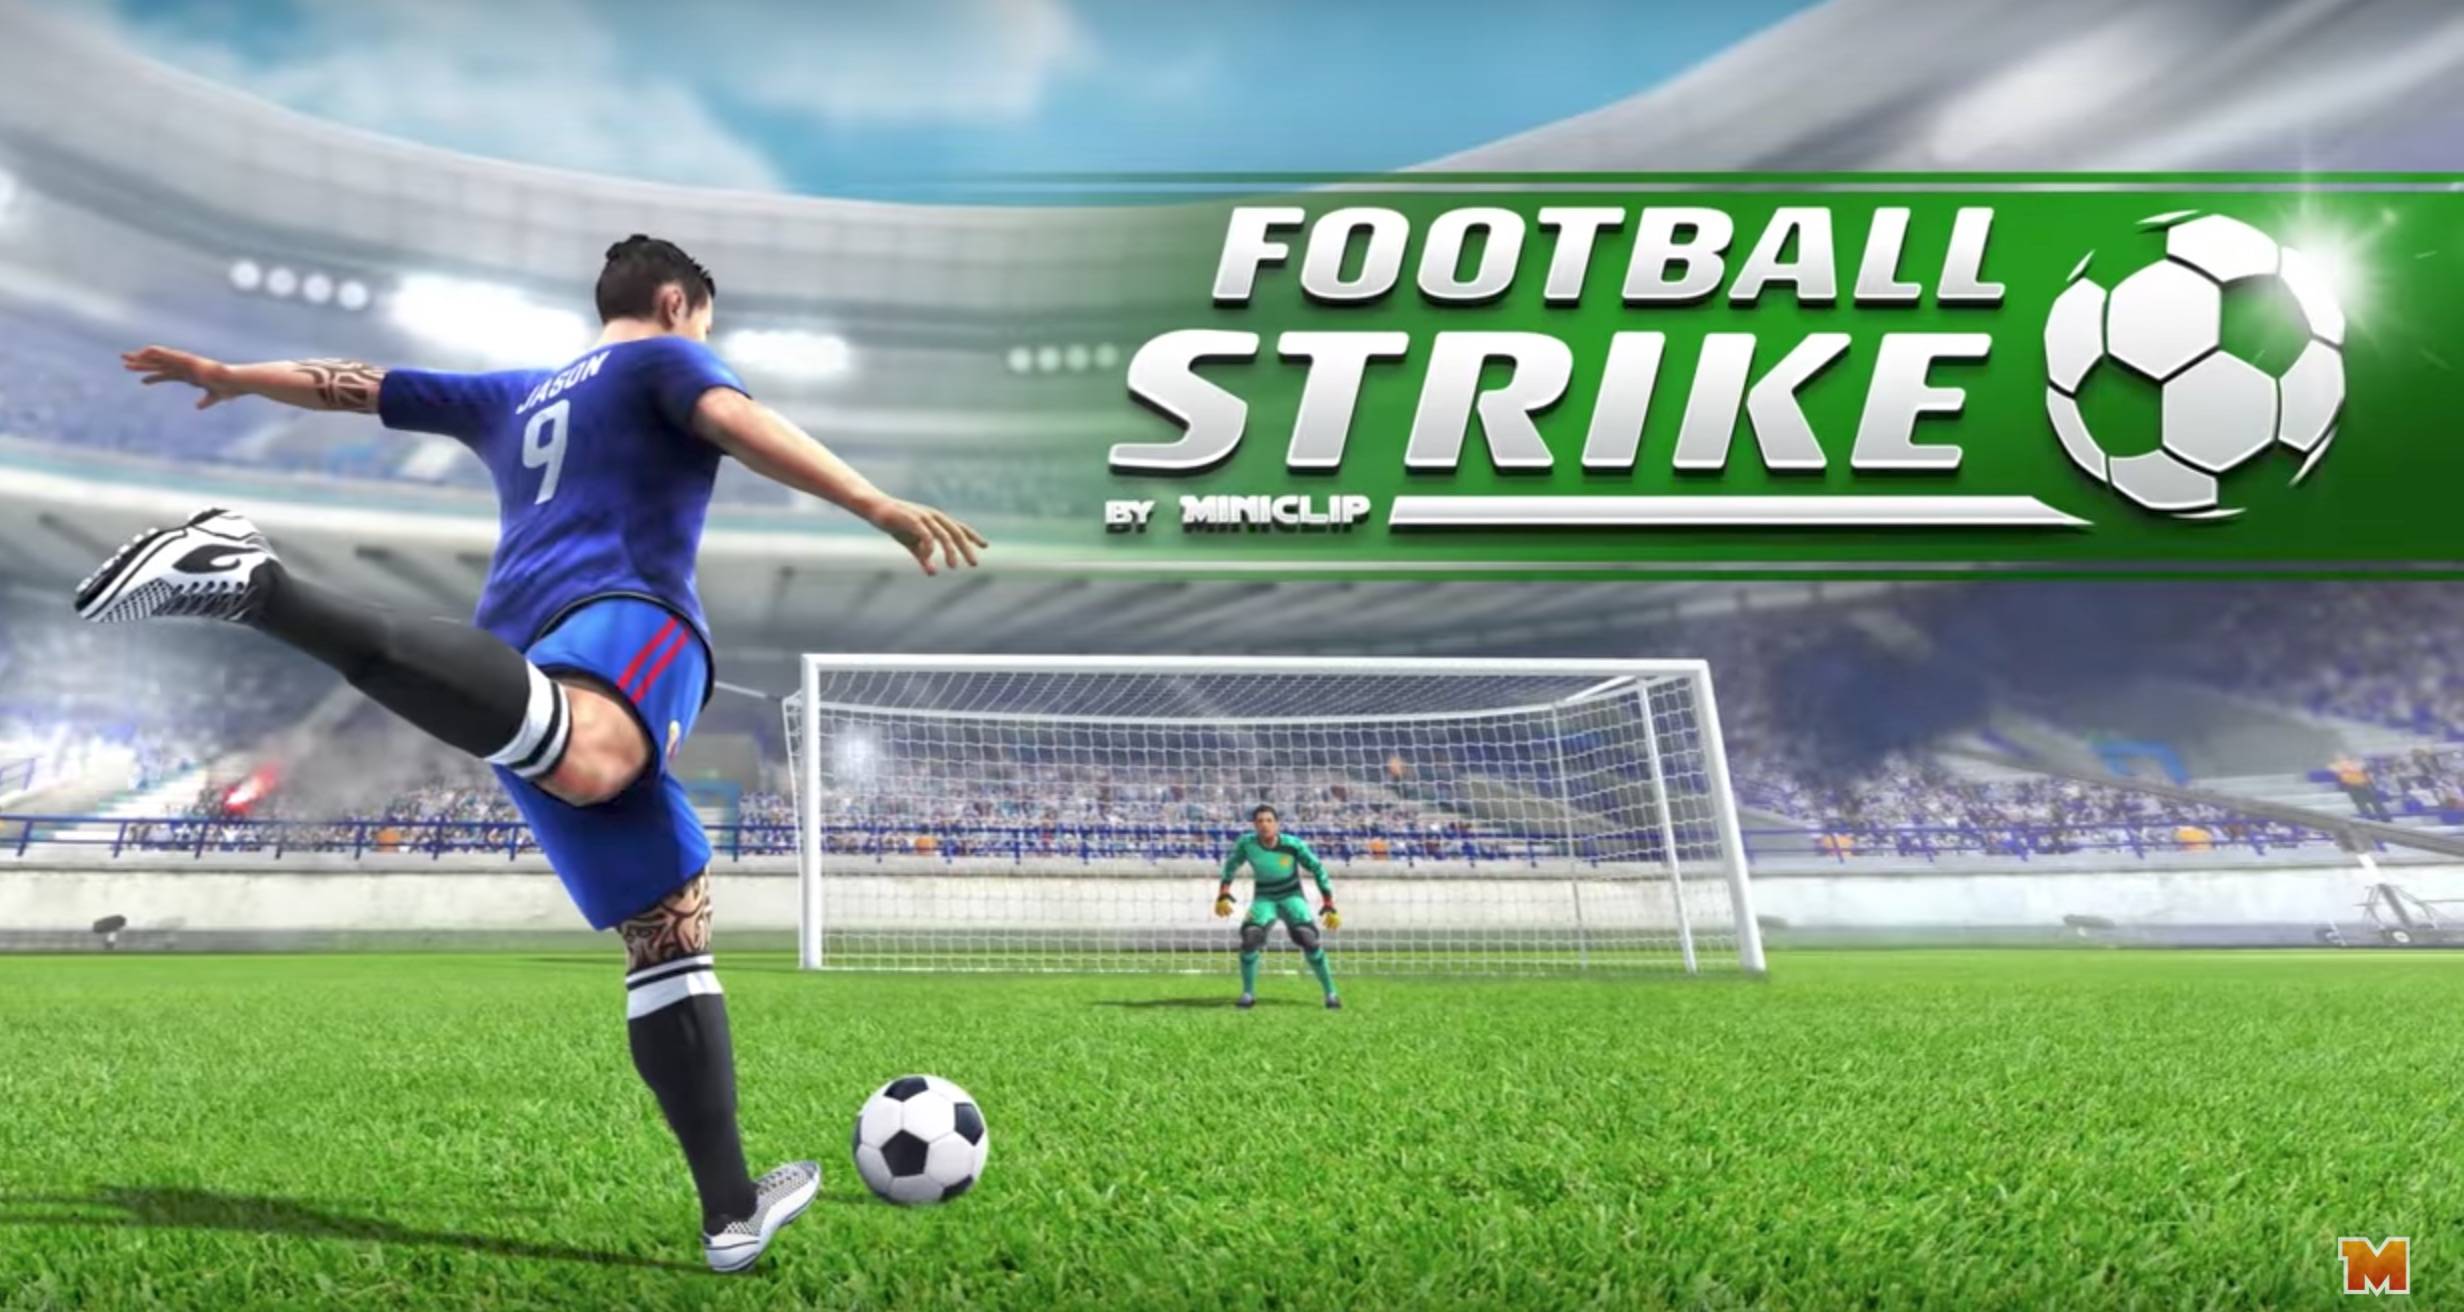 Football Strike - Perfect Kick free downloads